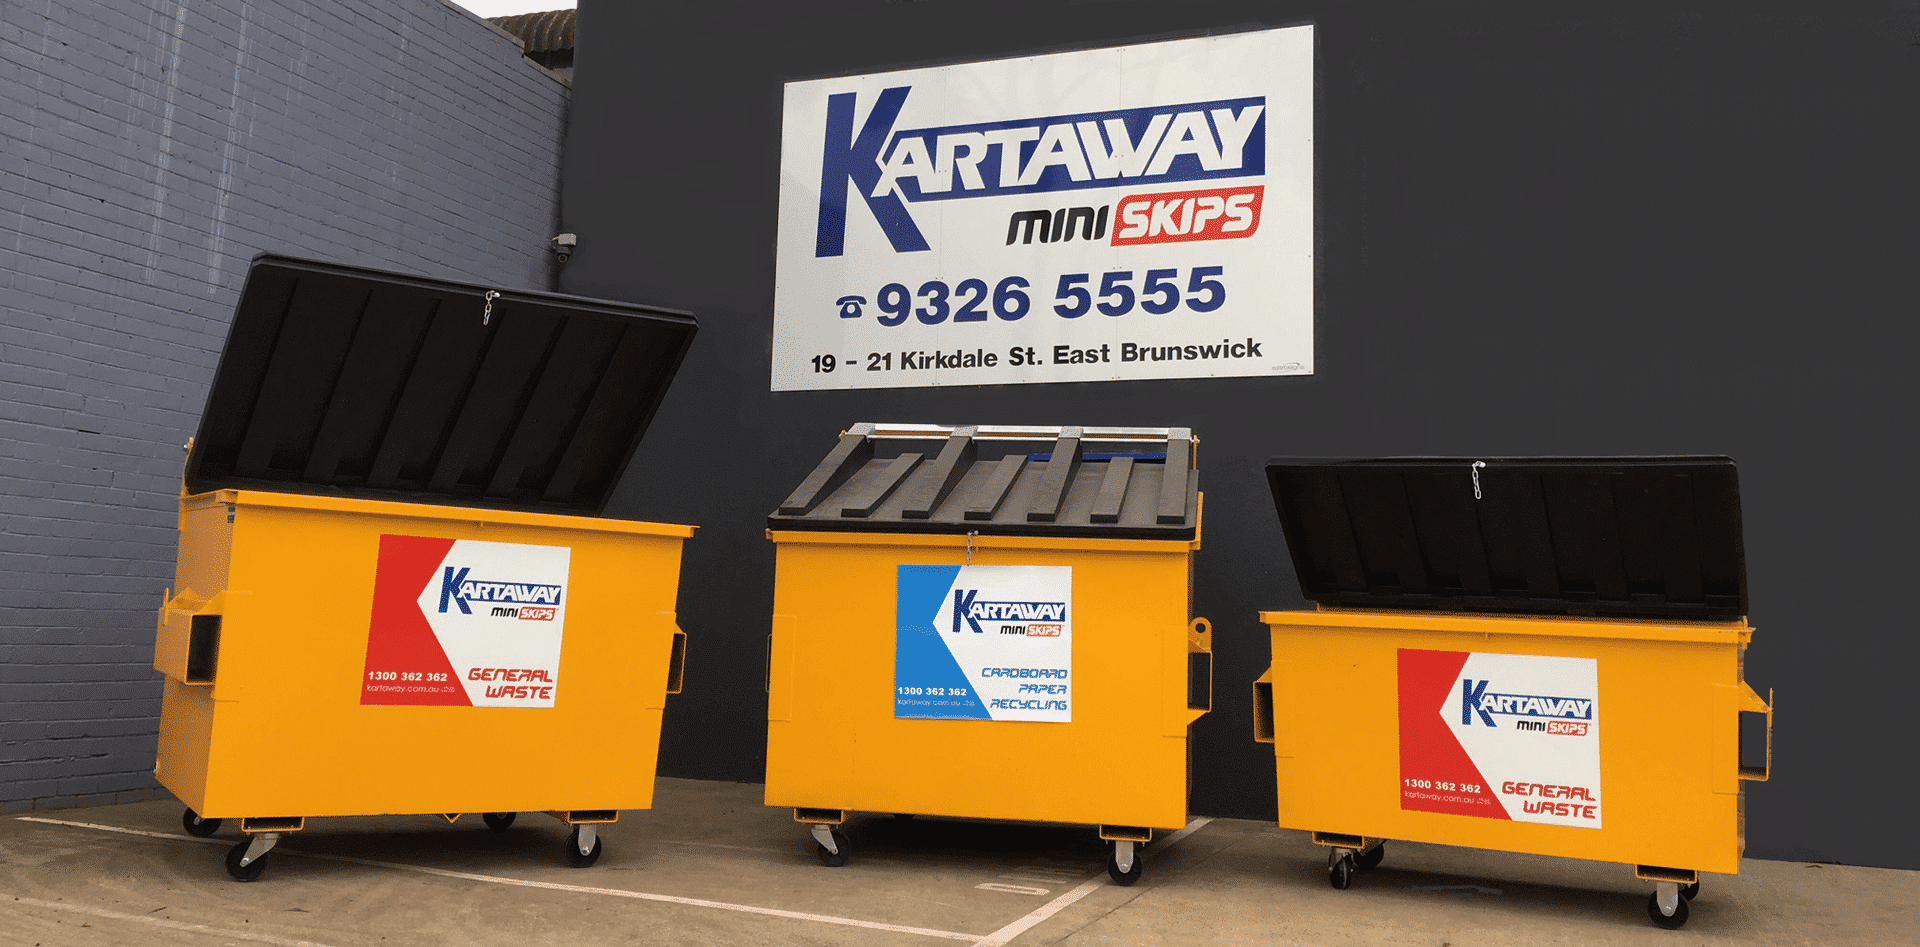 Kartaway Commercial Skip & Mini Skip Bins